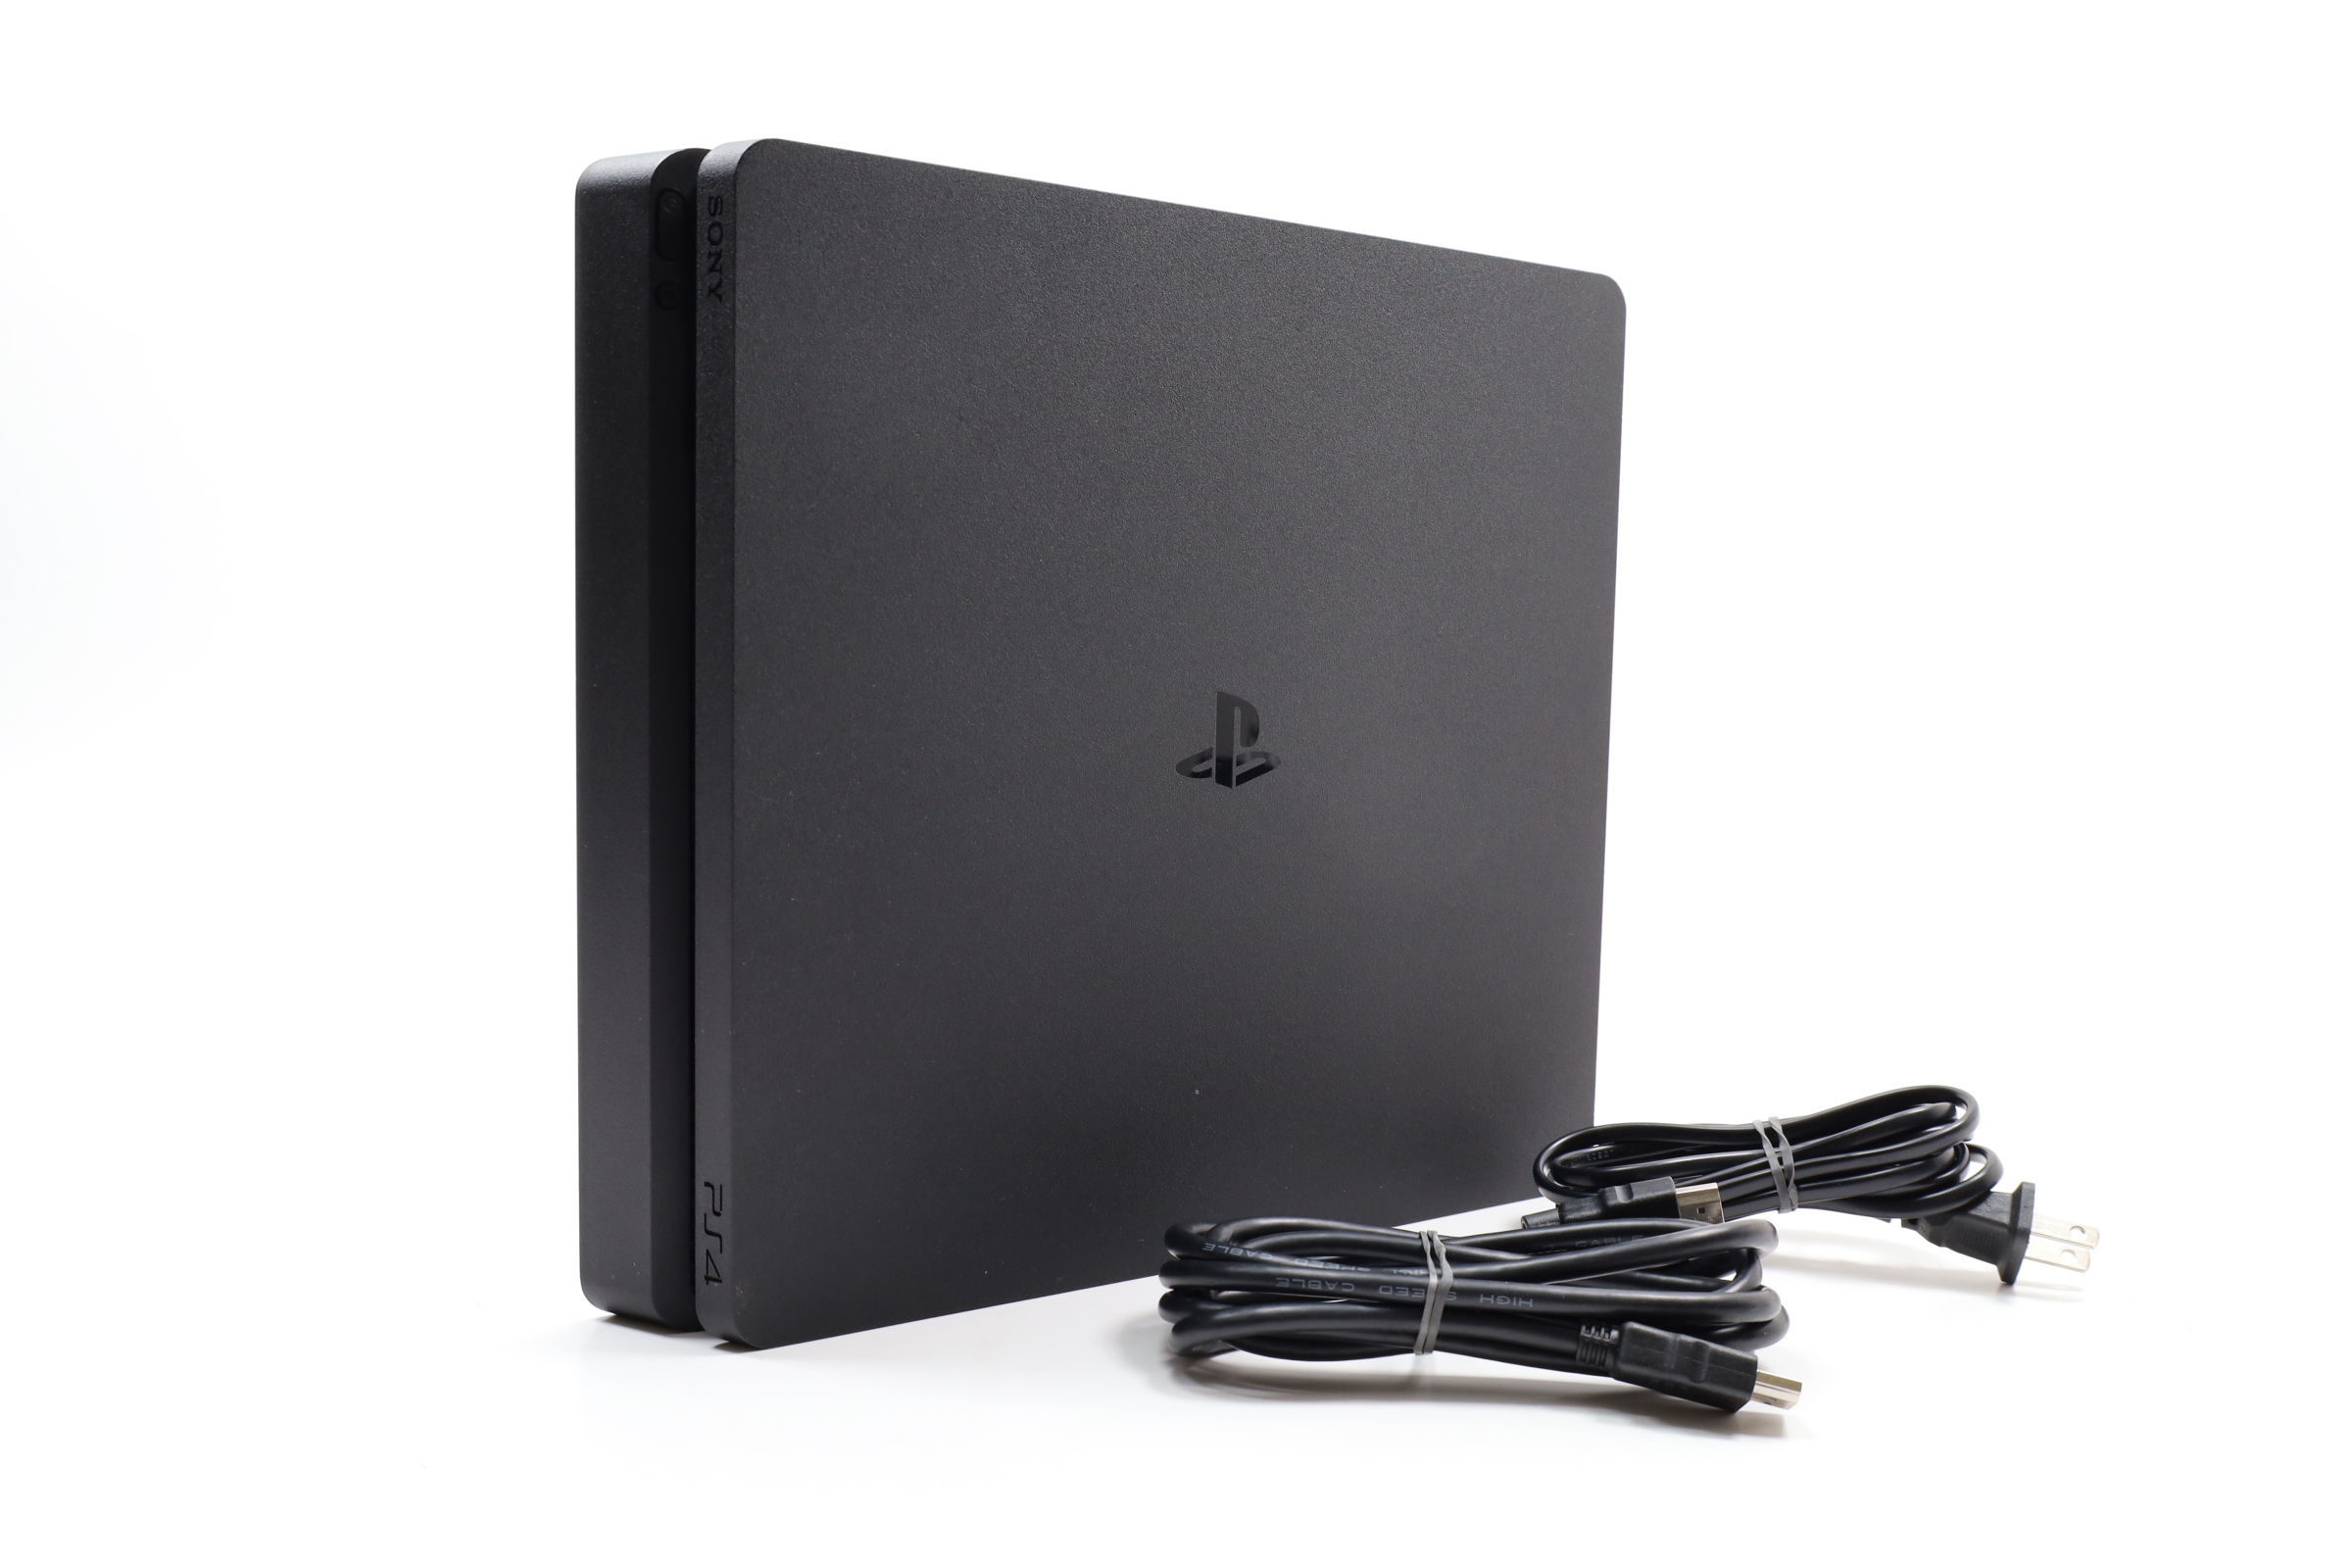 Sony PlayStation 4 Slim CUH-2000A 500GB Video Game Console - Black (3797)